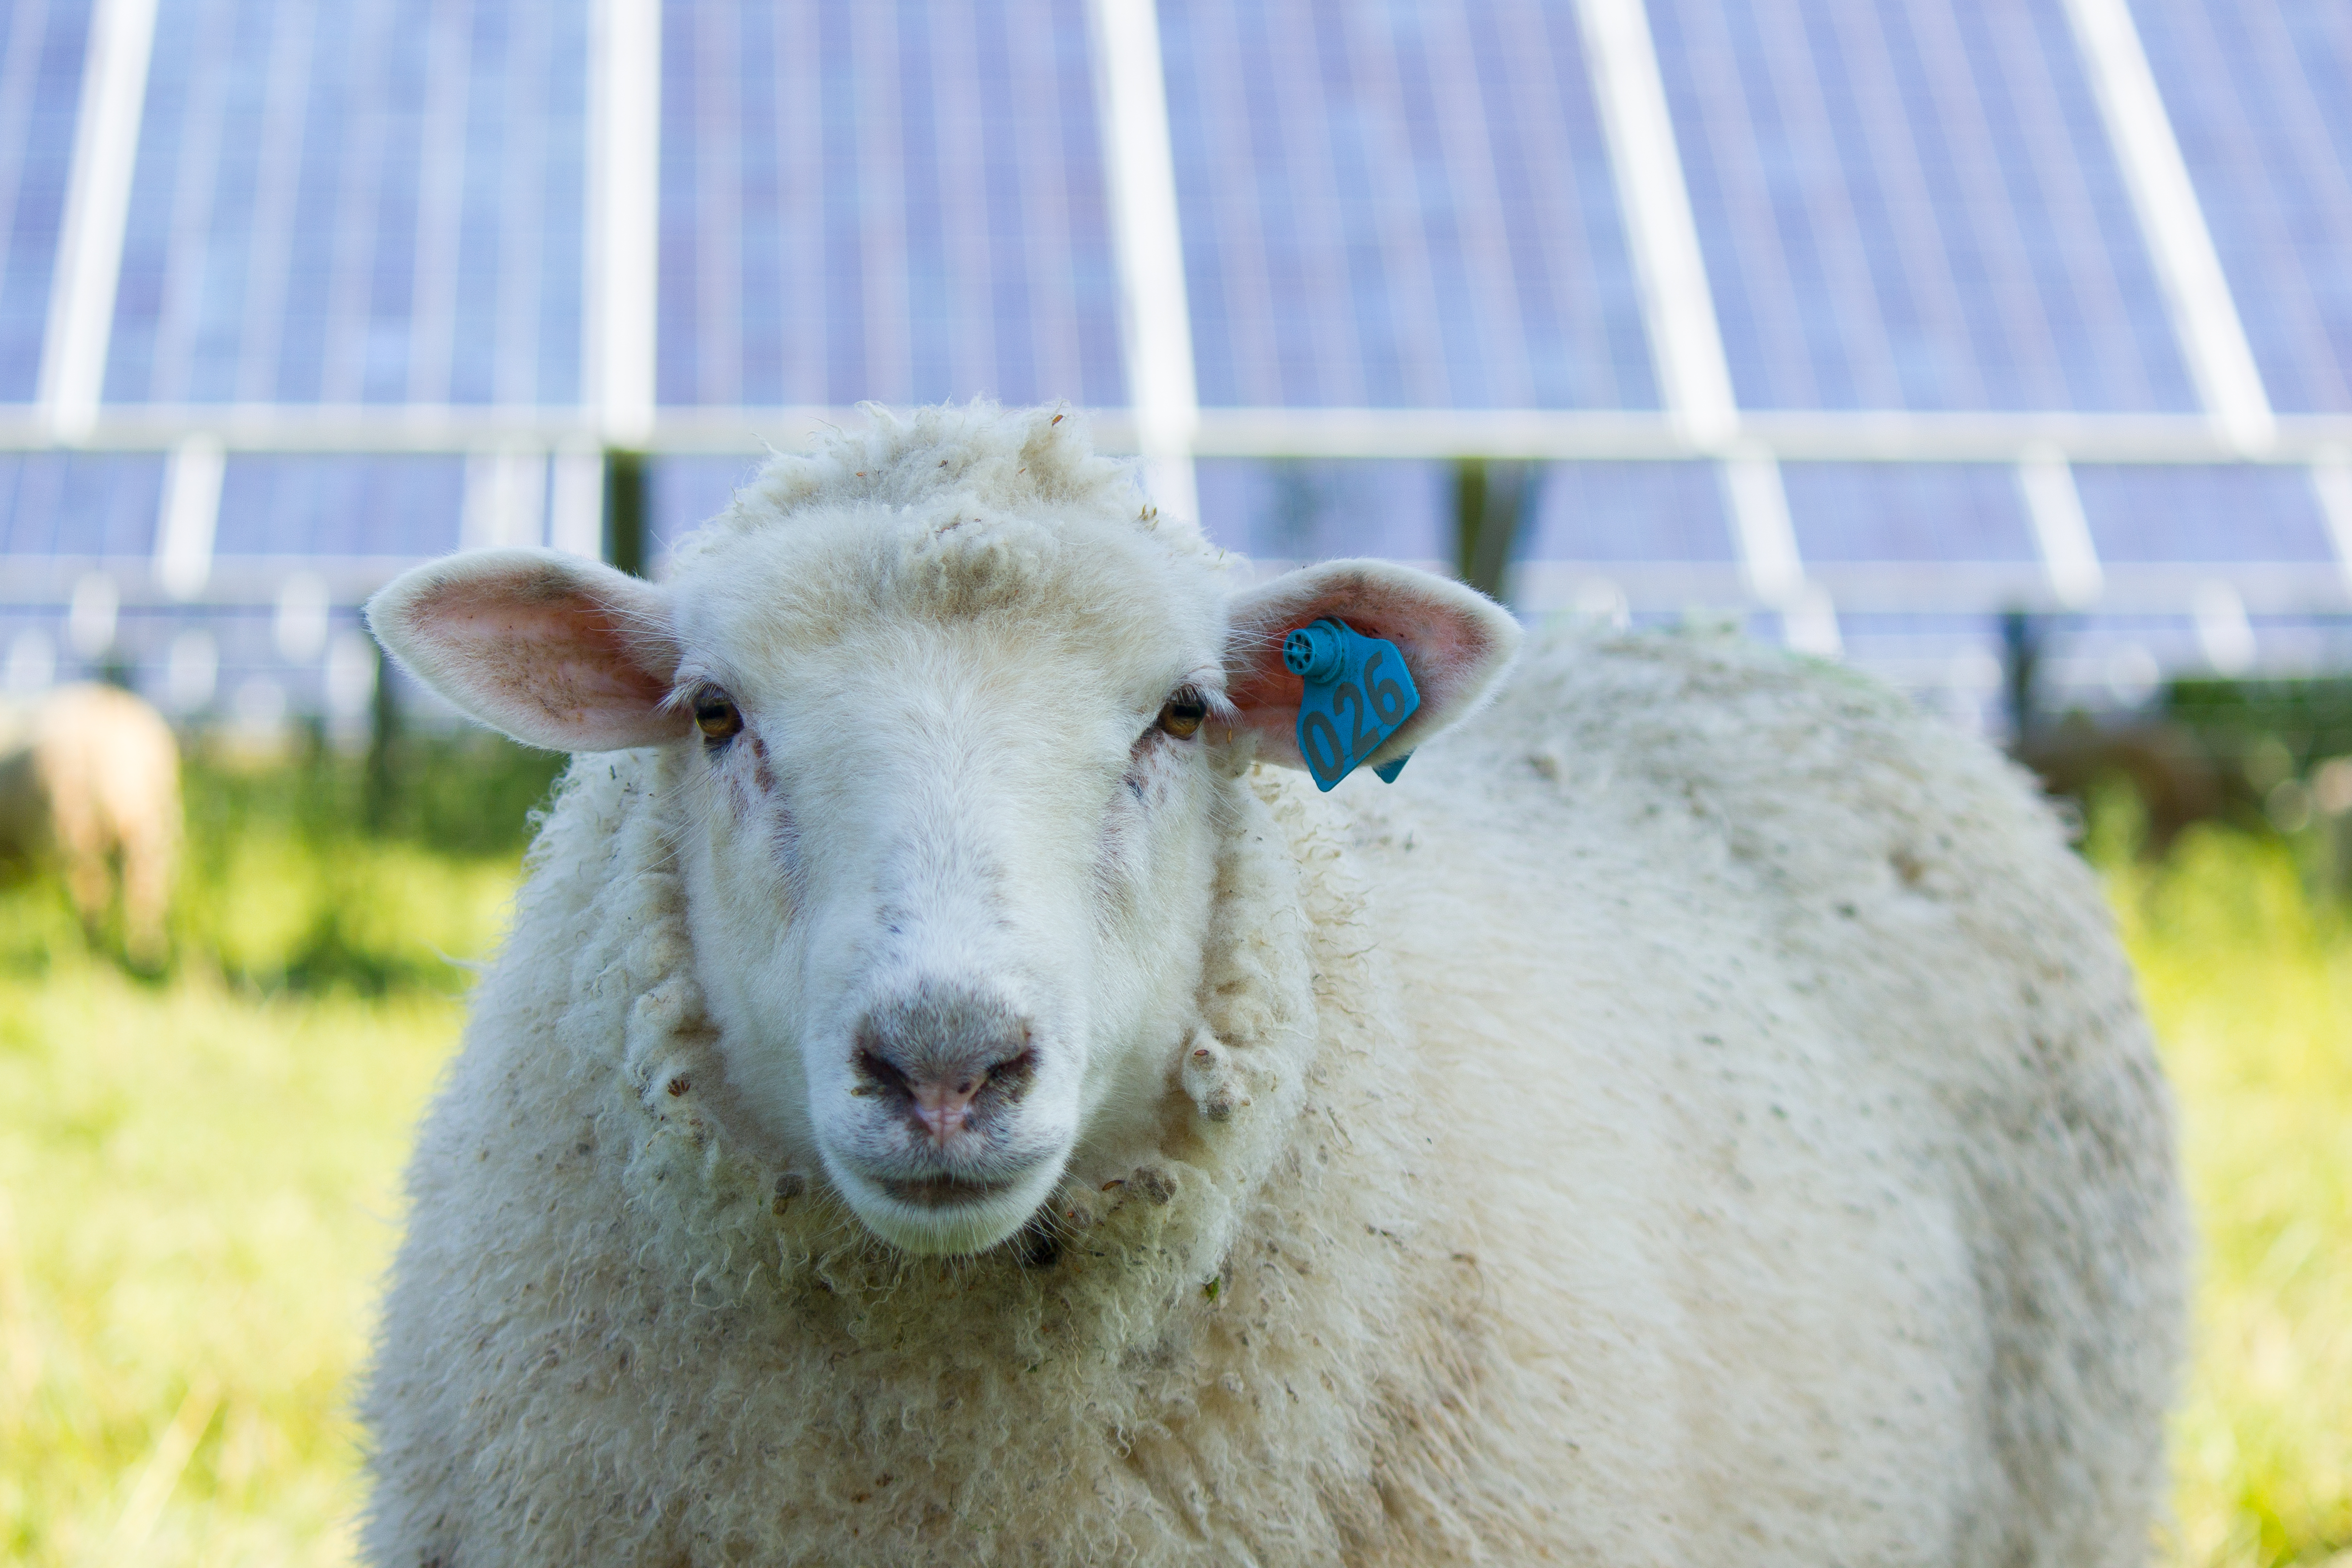 Sheep near solar panels